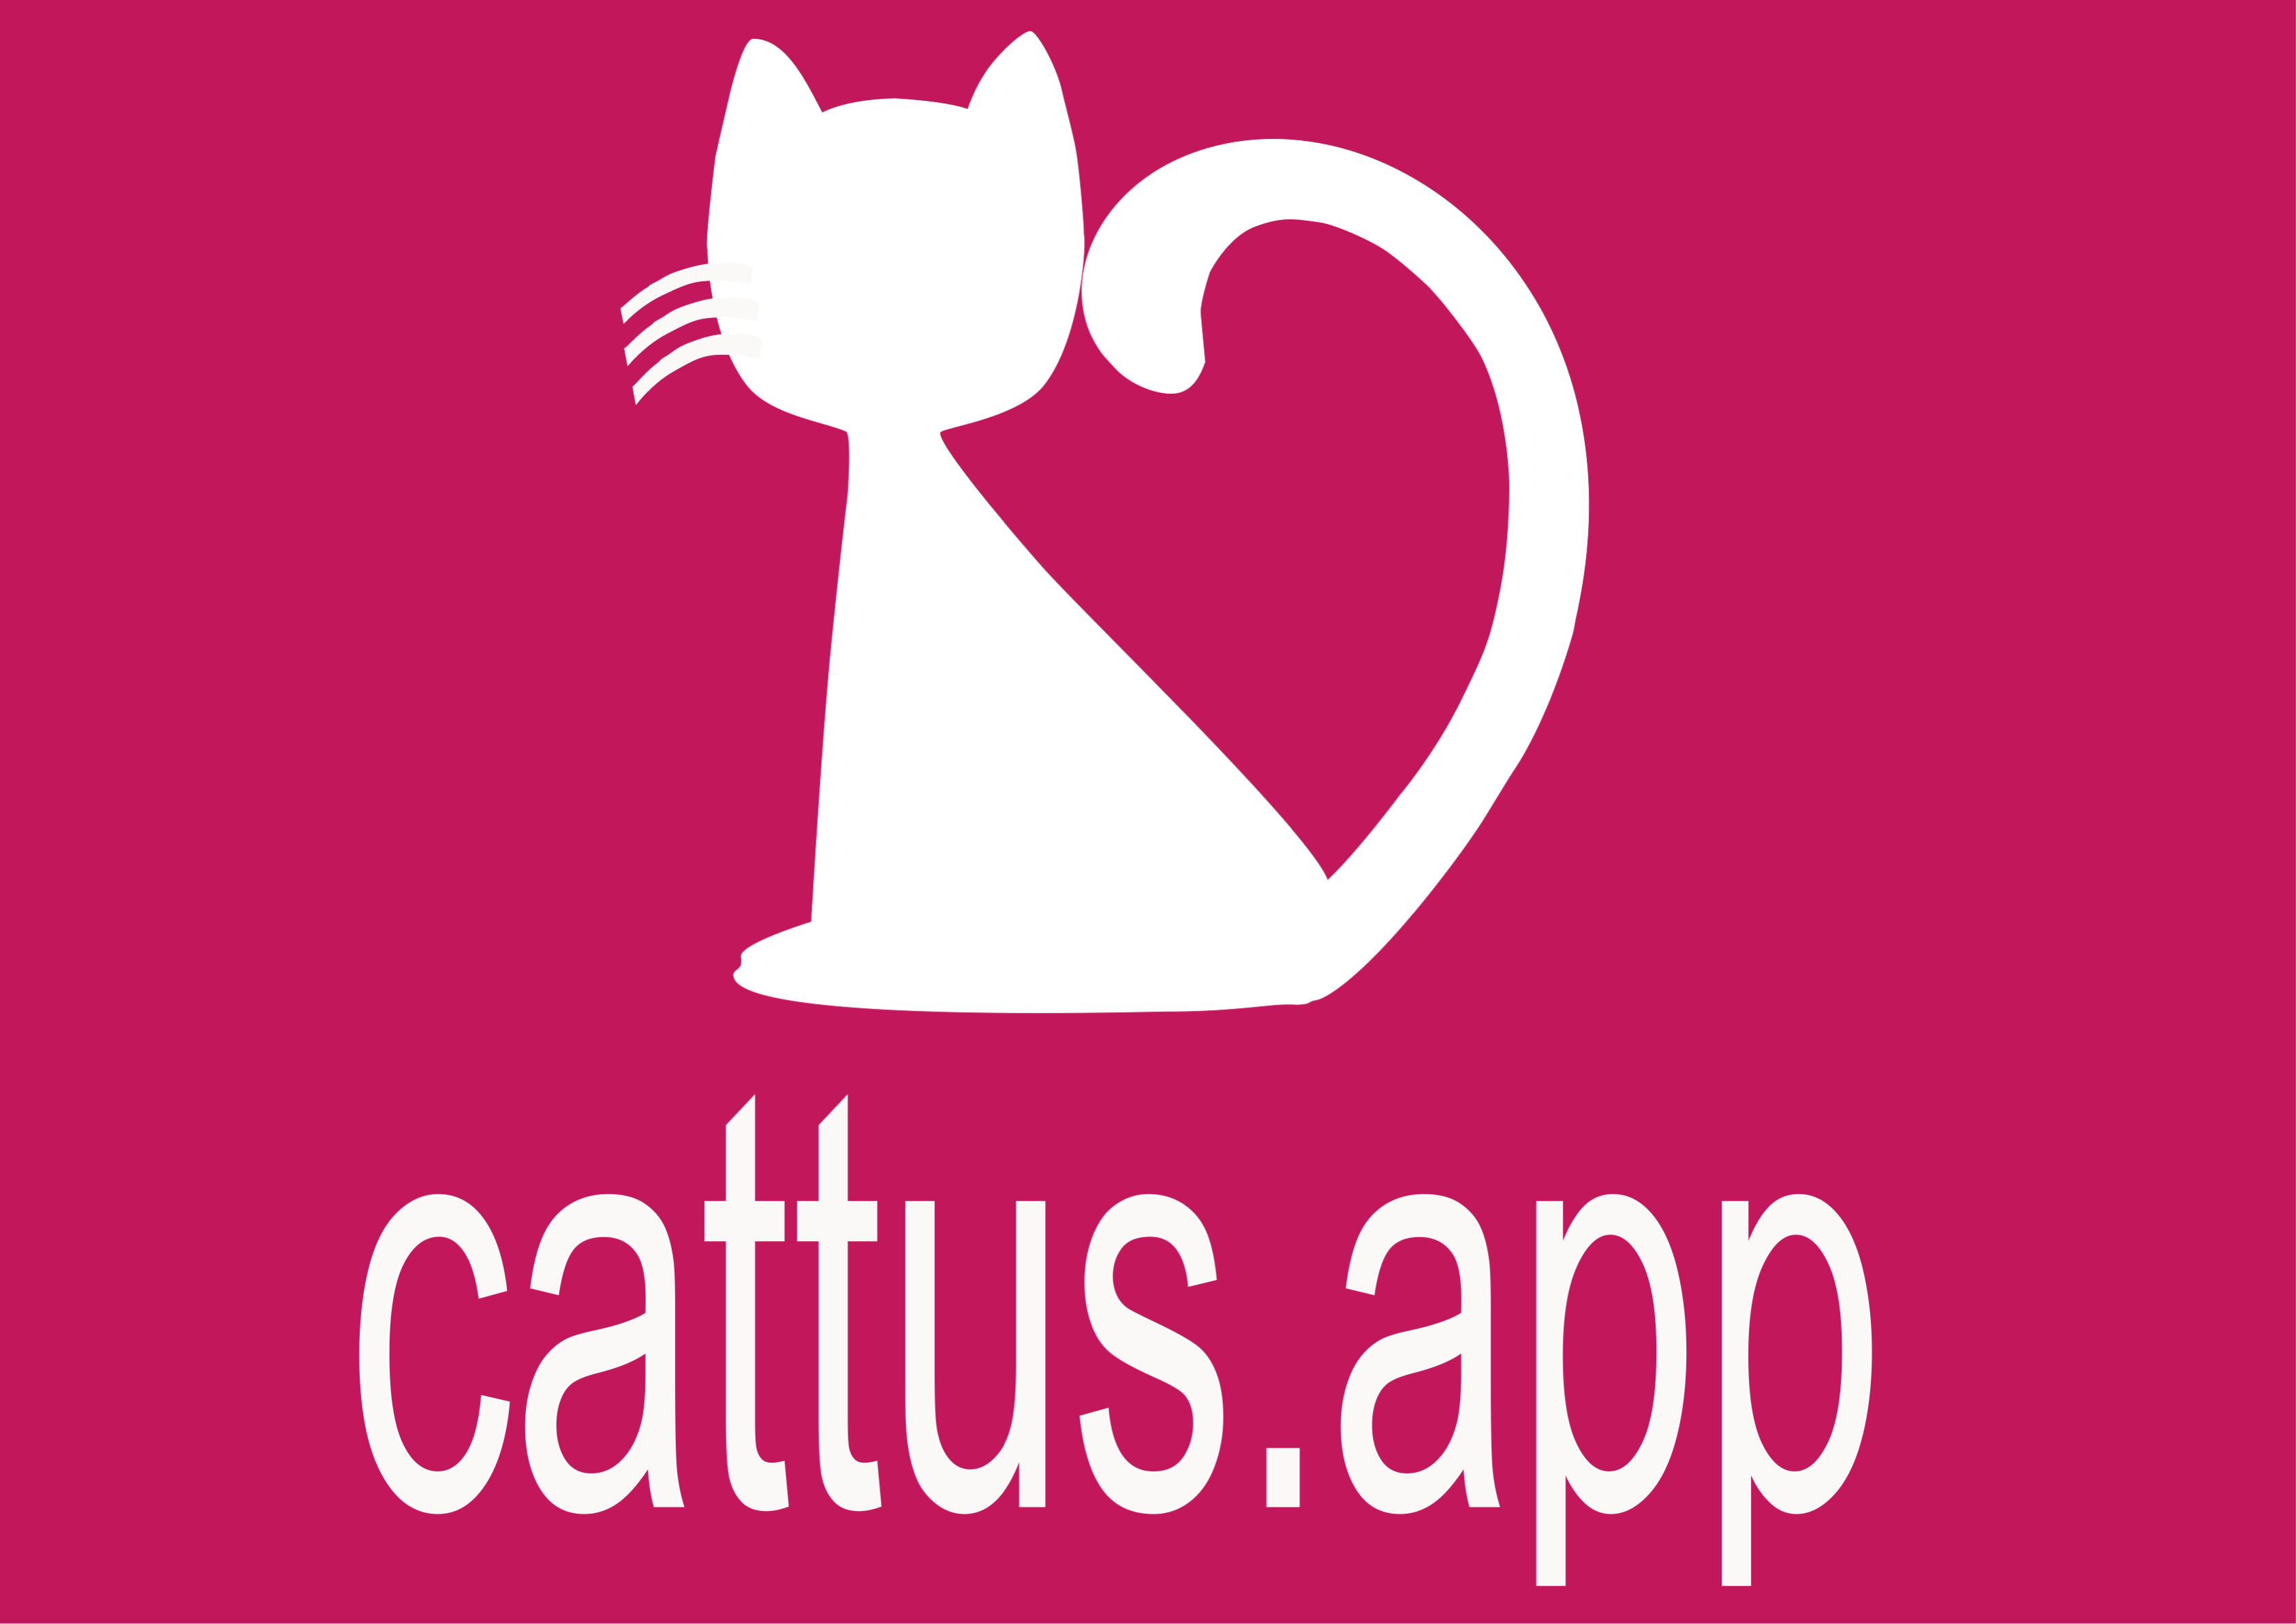 cattus learn latin icon app